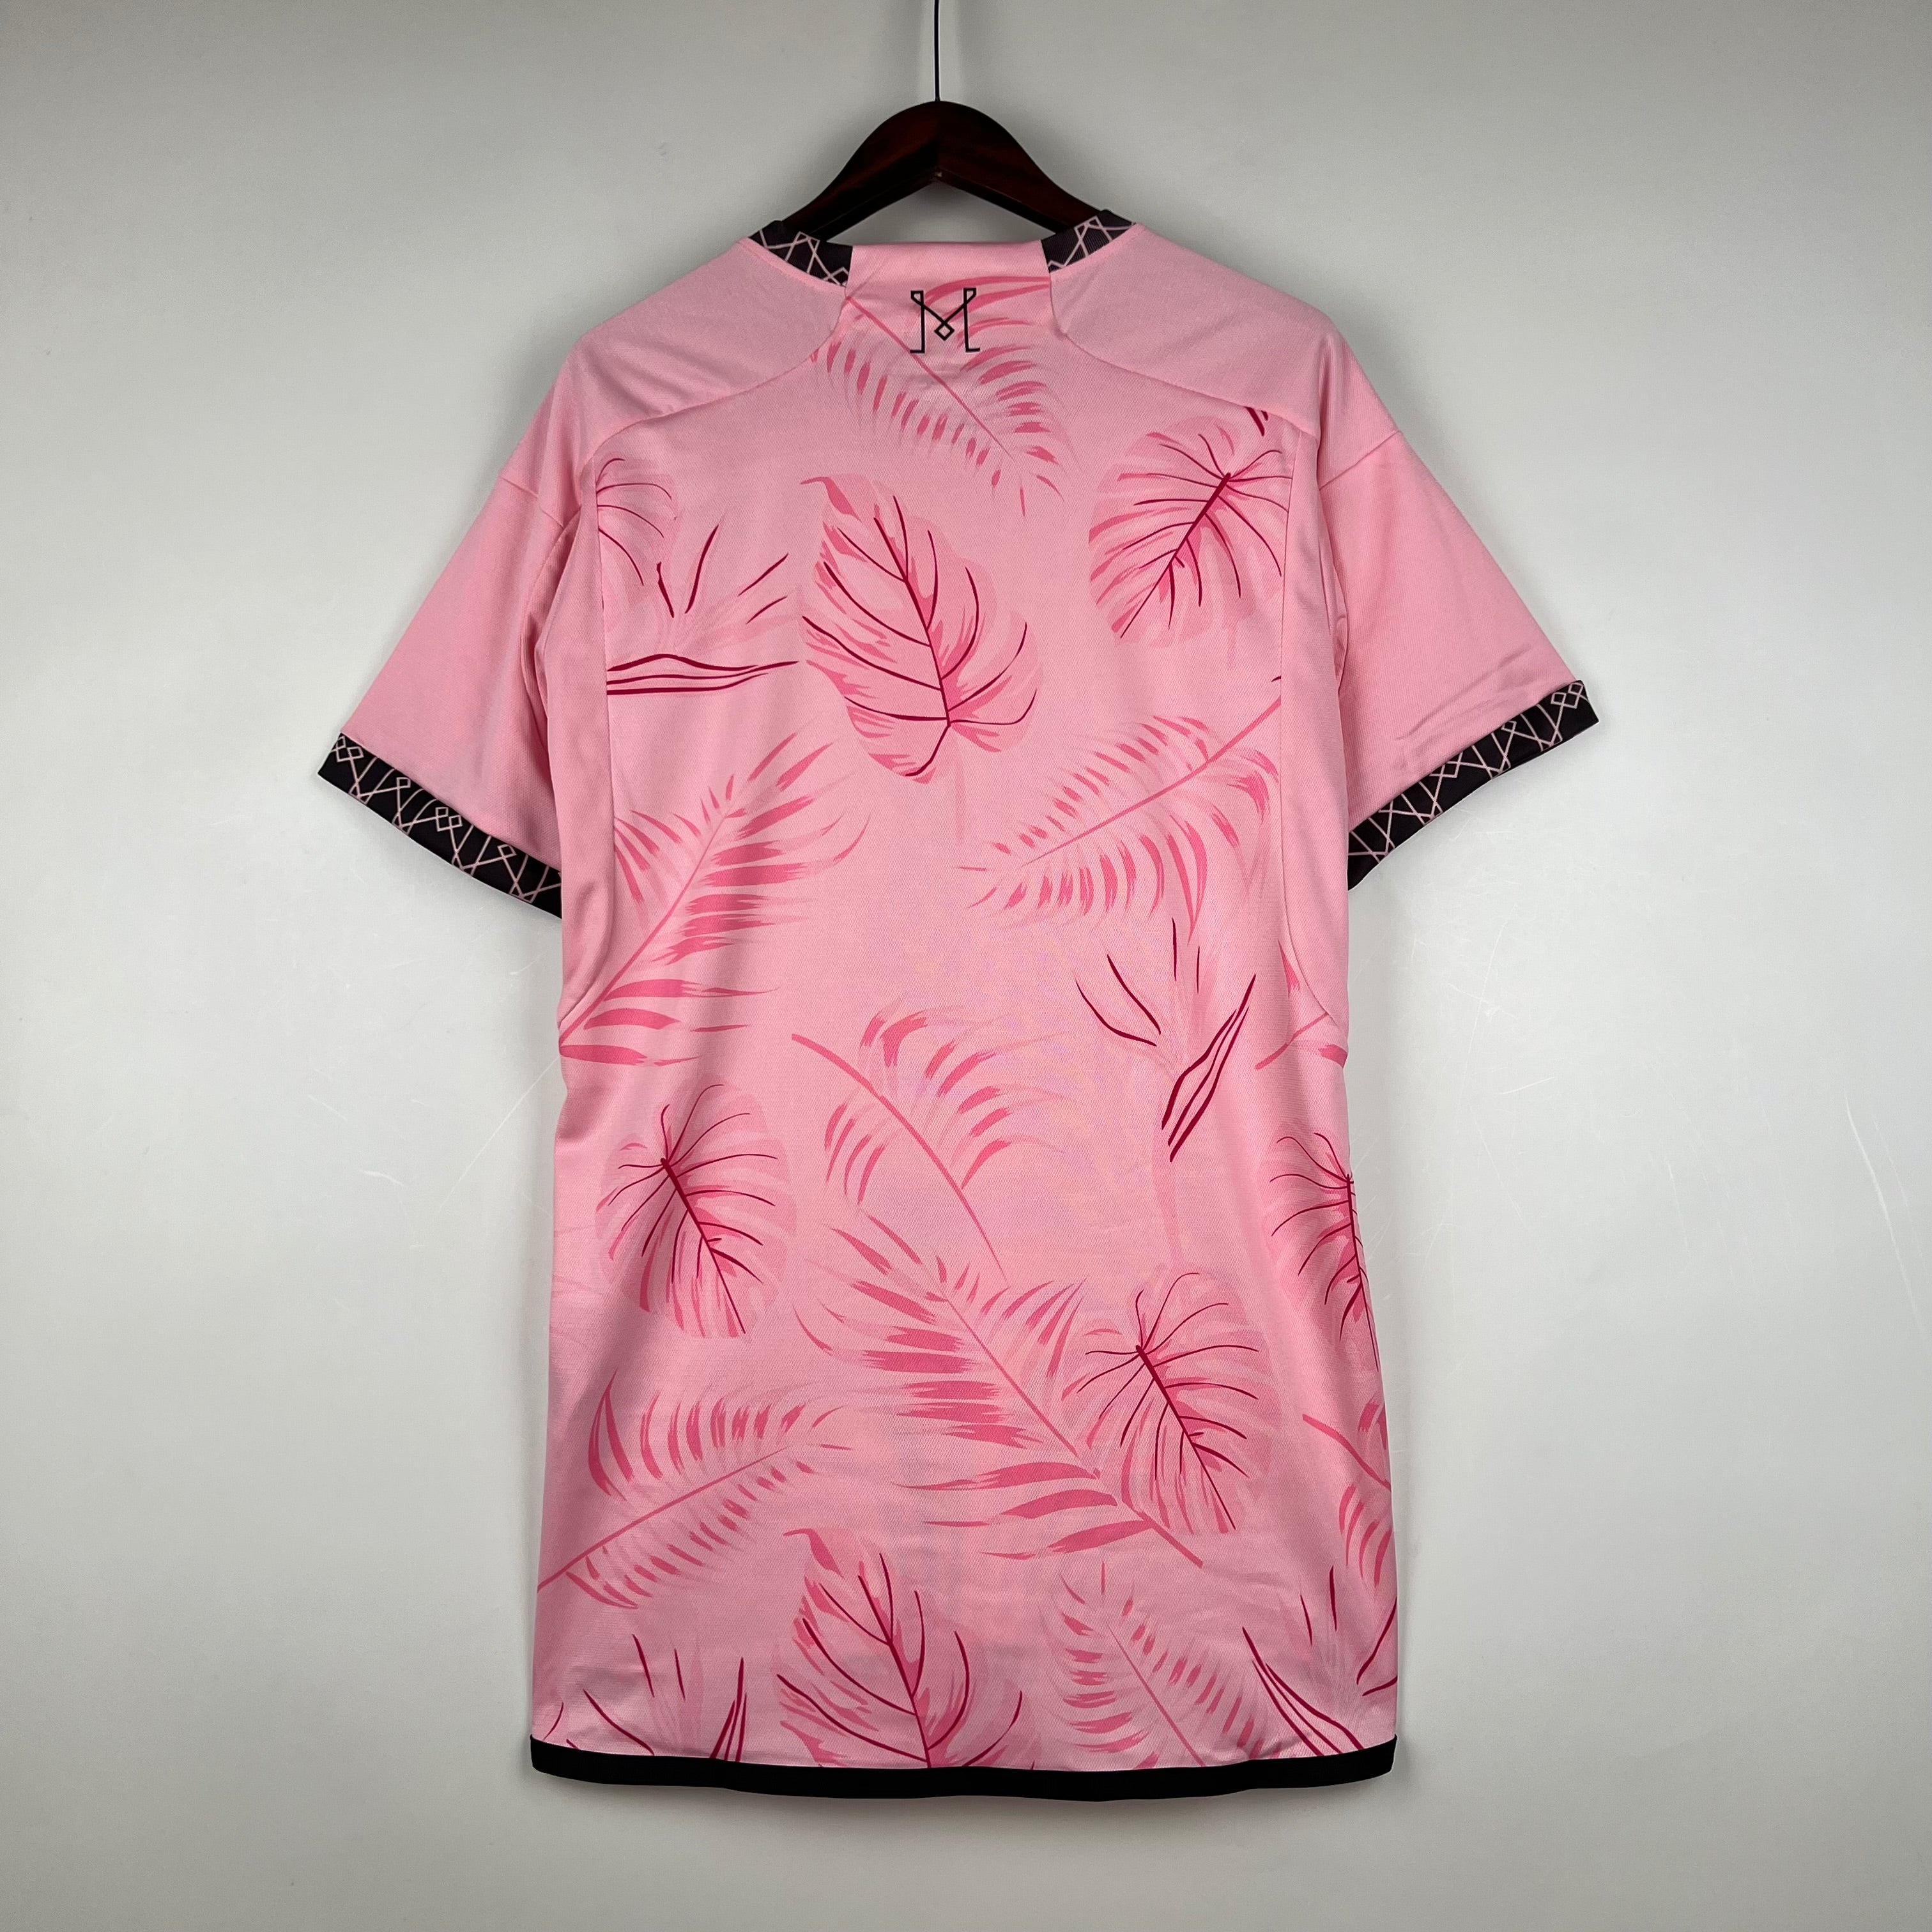 Inter Miami Special Pink Kit